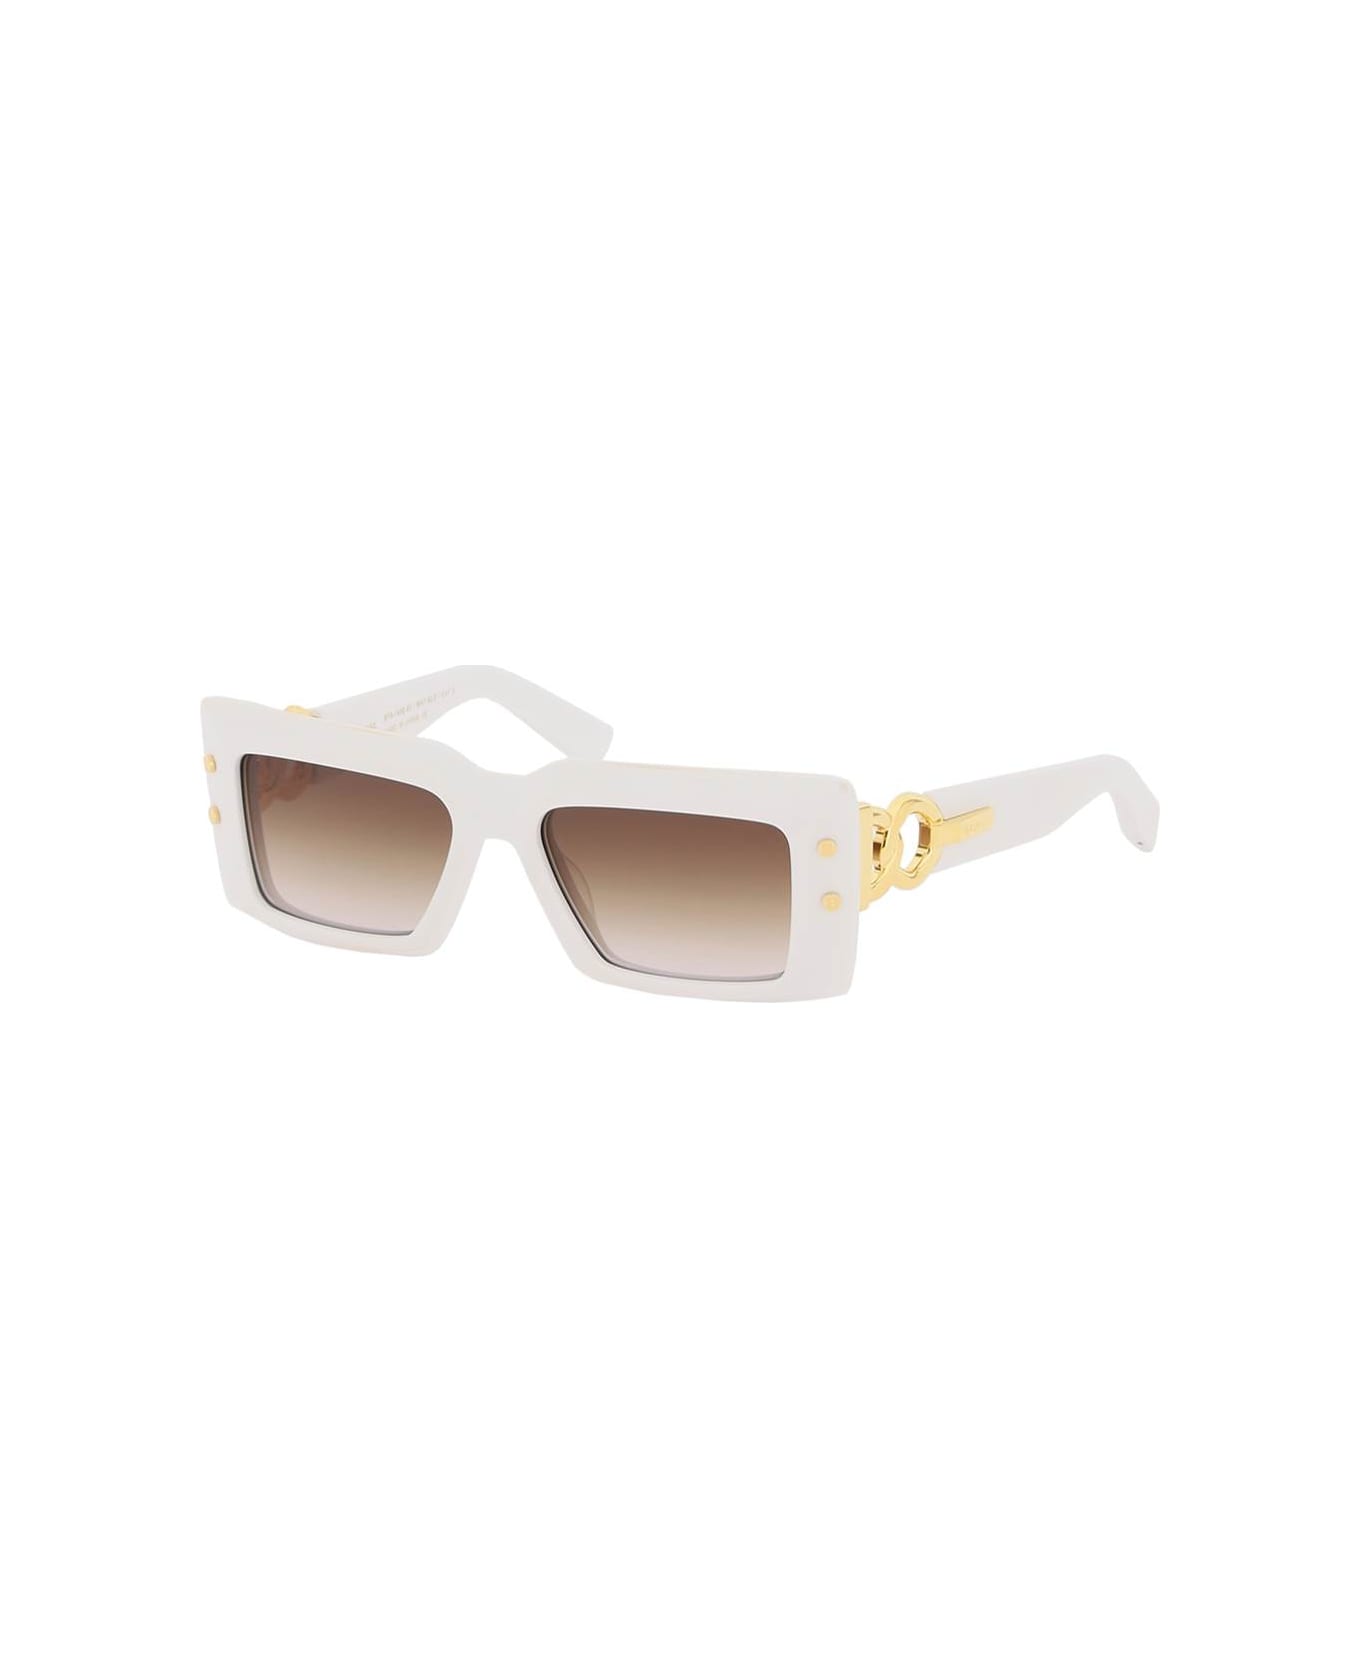 Balmain Imperial Sunglasses - WHITE GOLD (White)